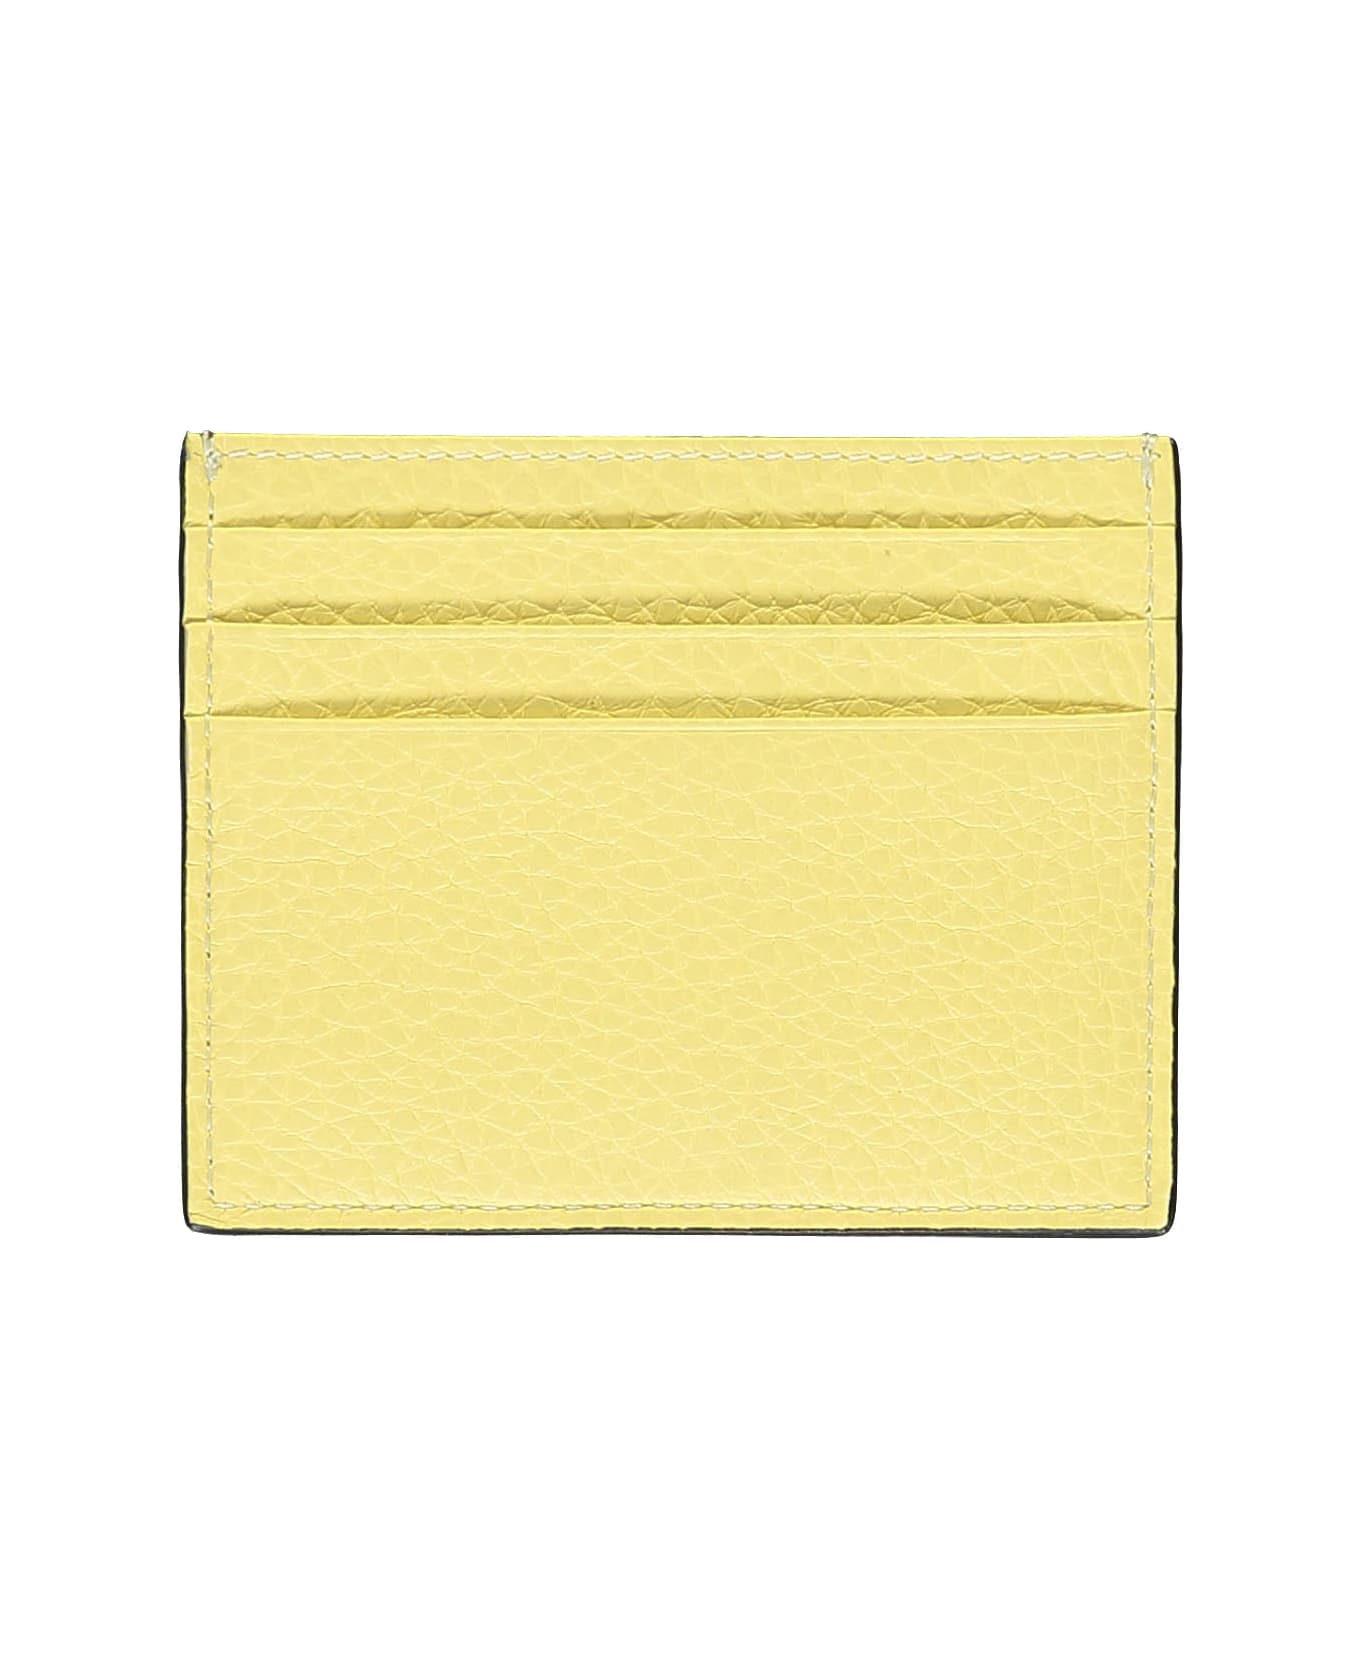 Fendi logo Leather Card Holder - brown